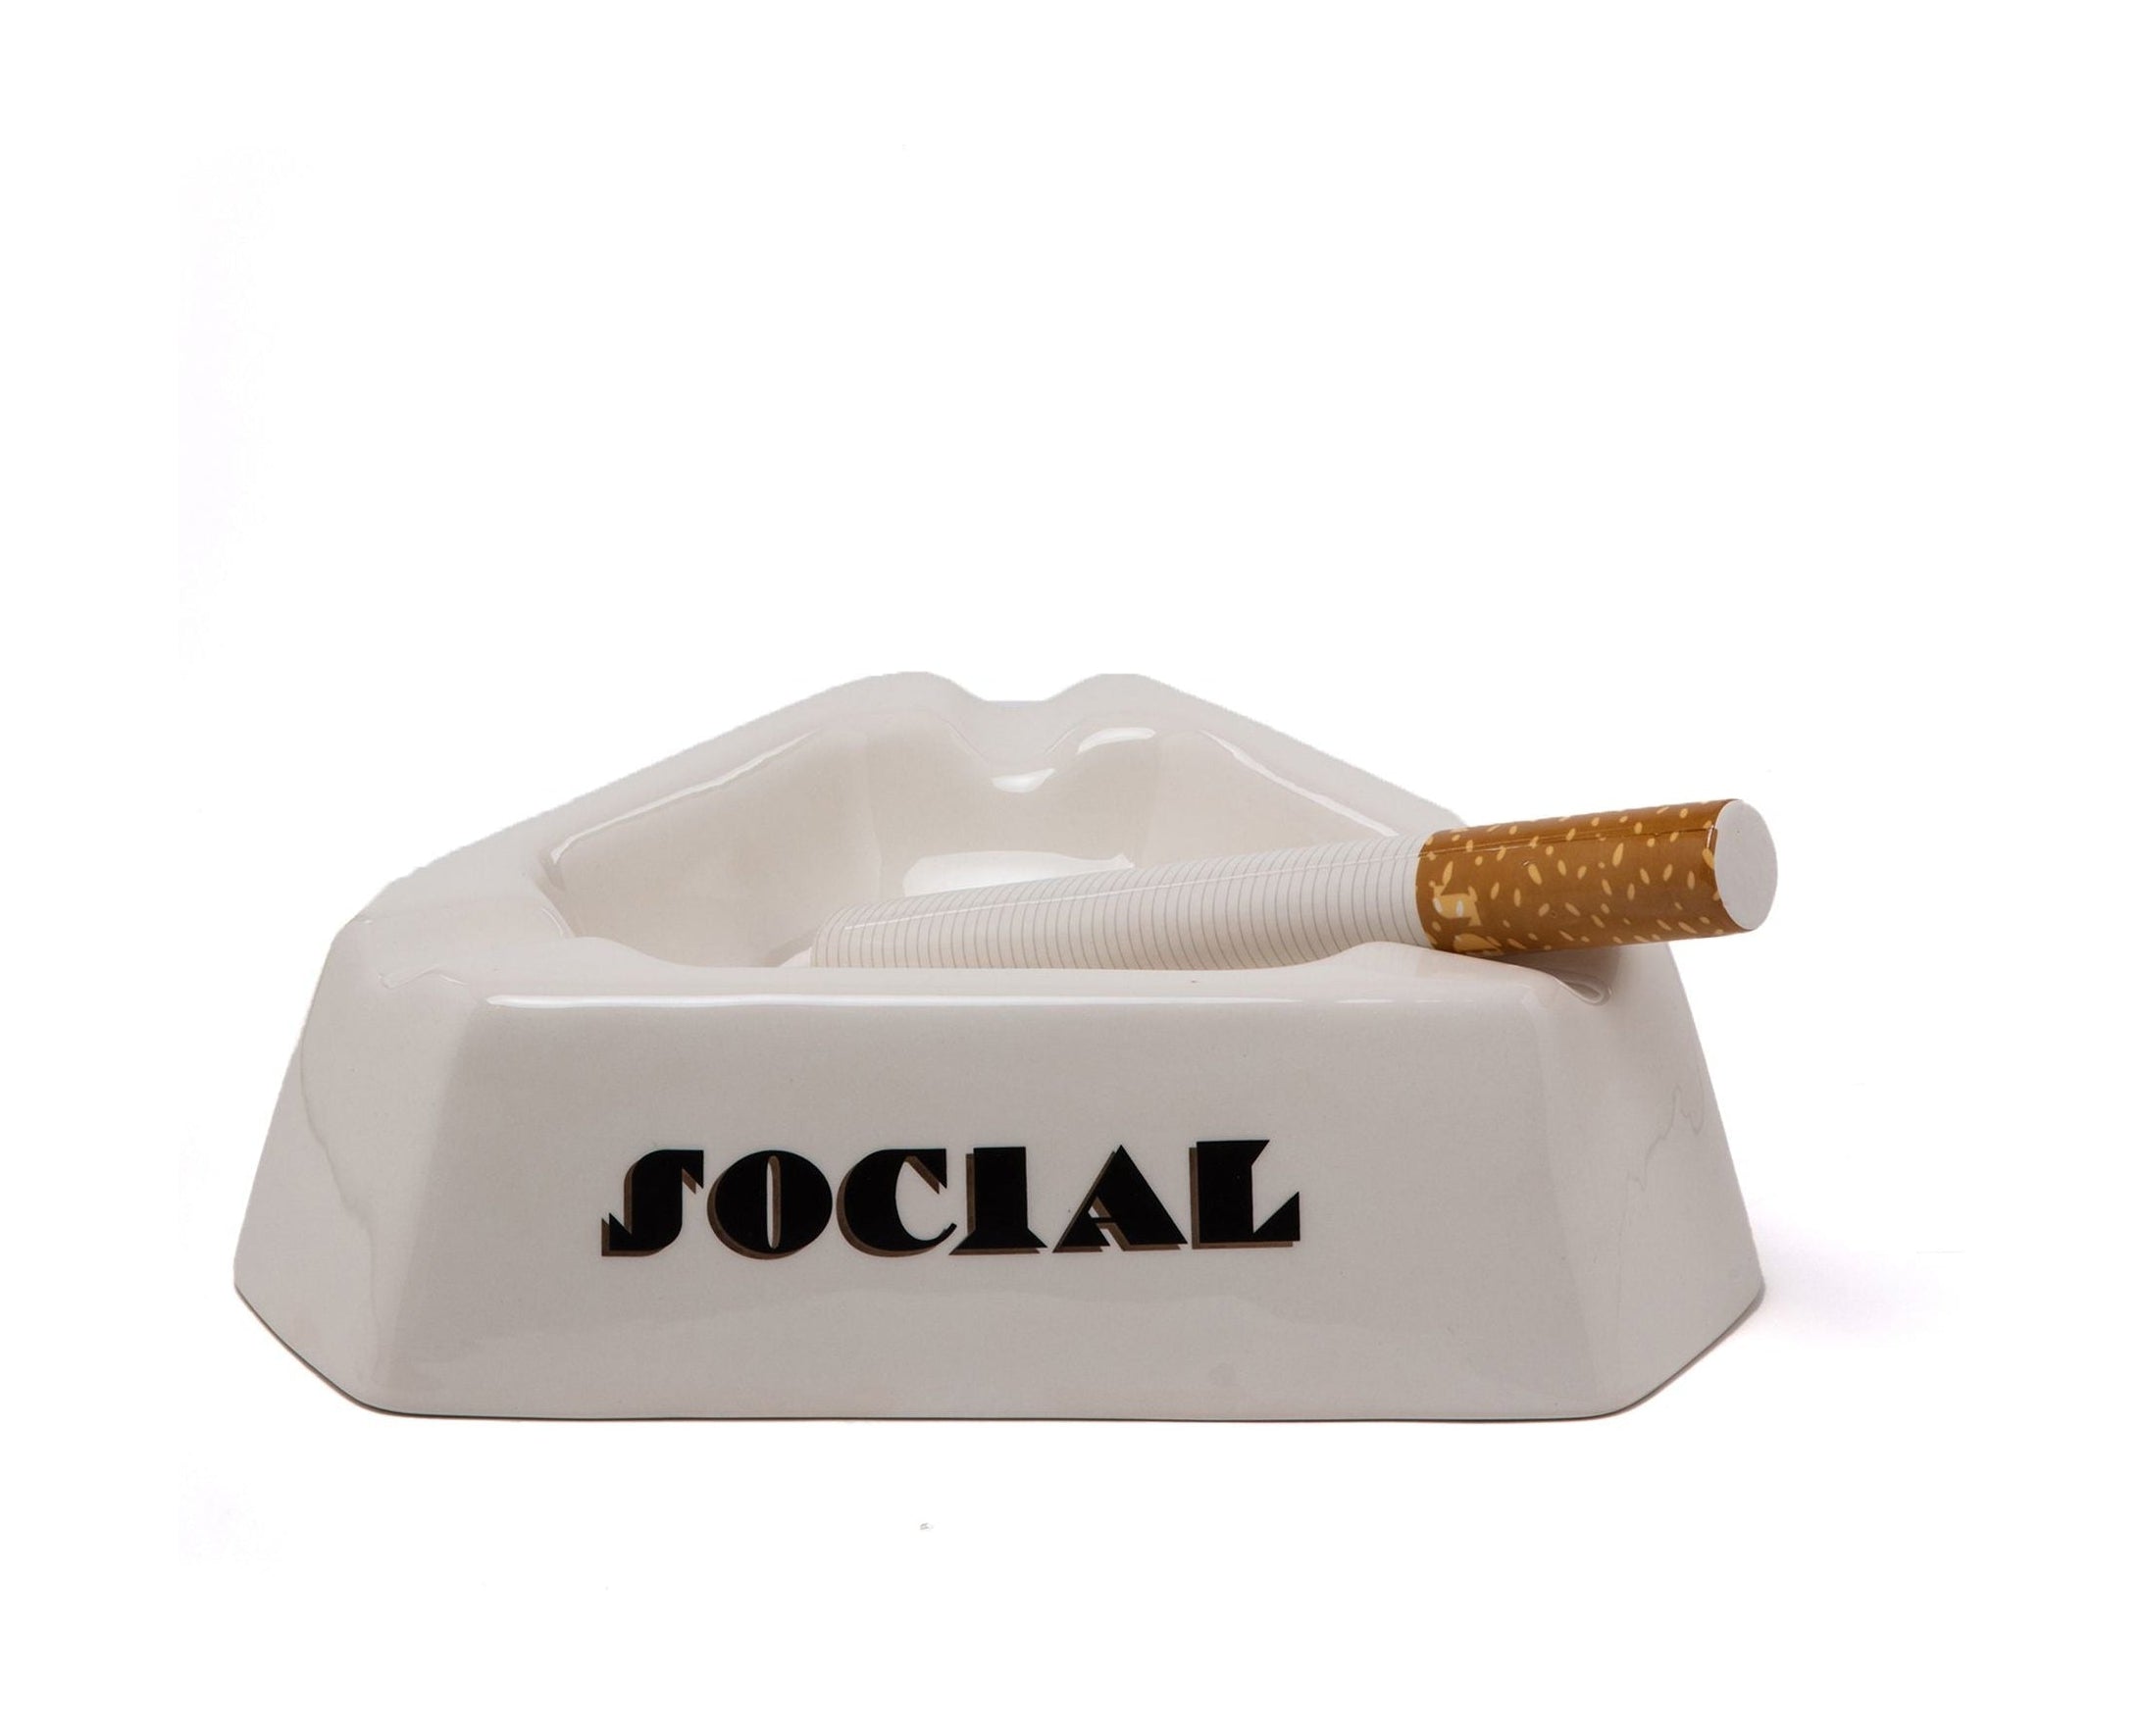 Seletti Social Smoker Centerpiece